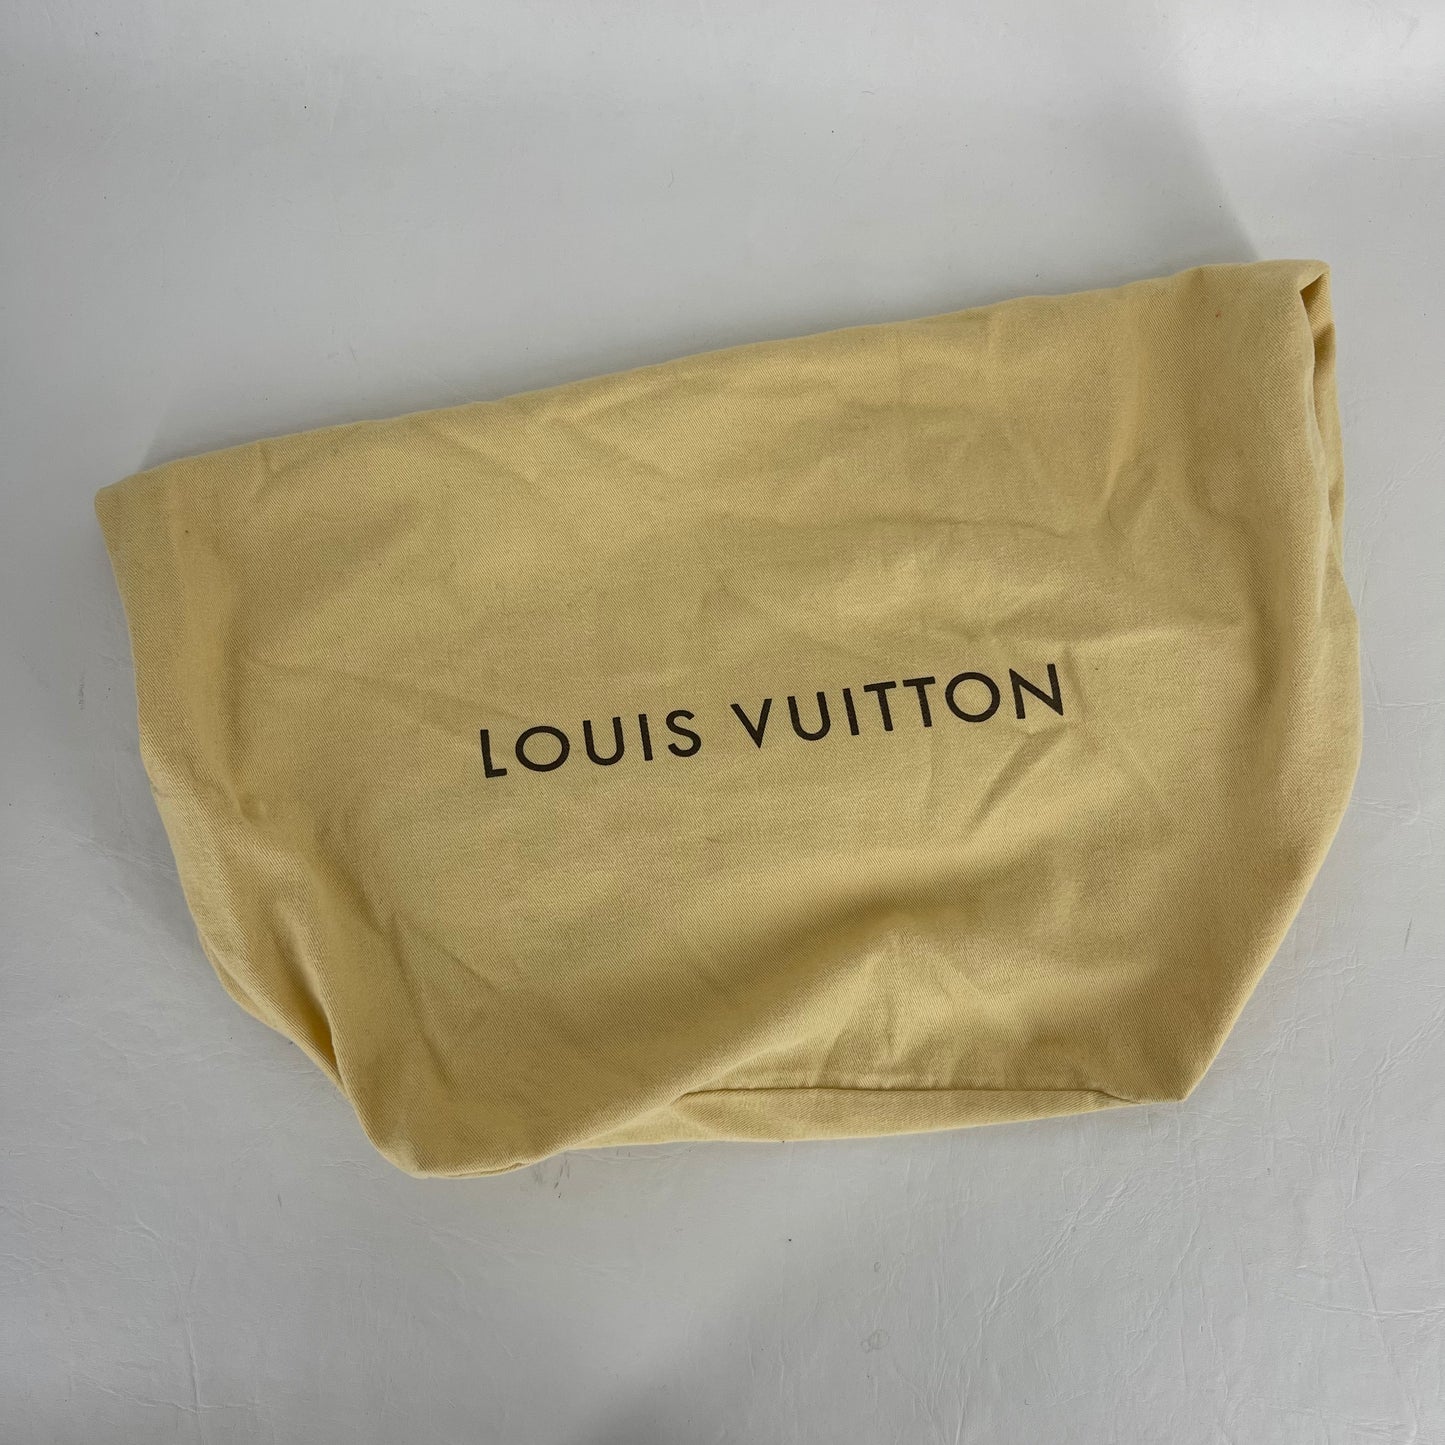 Authentic Louis Vuitton Chocolate Brown Mini-Lin Speedy 30